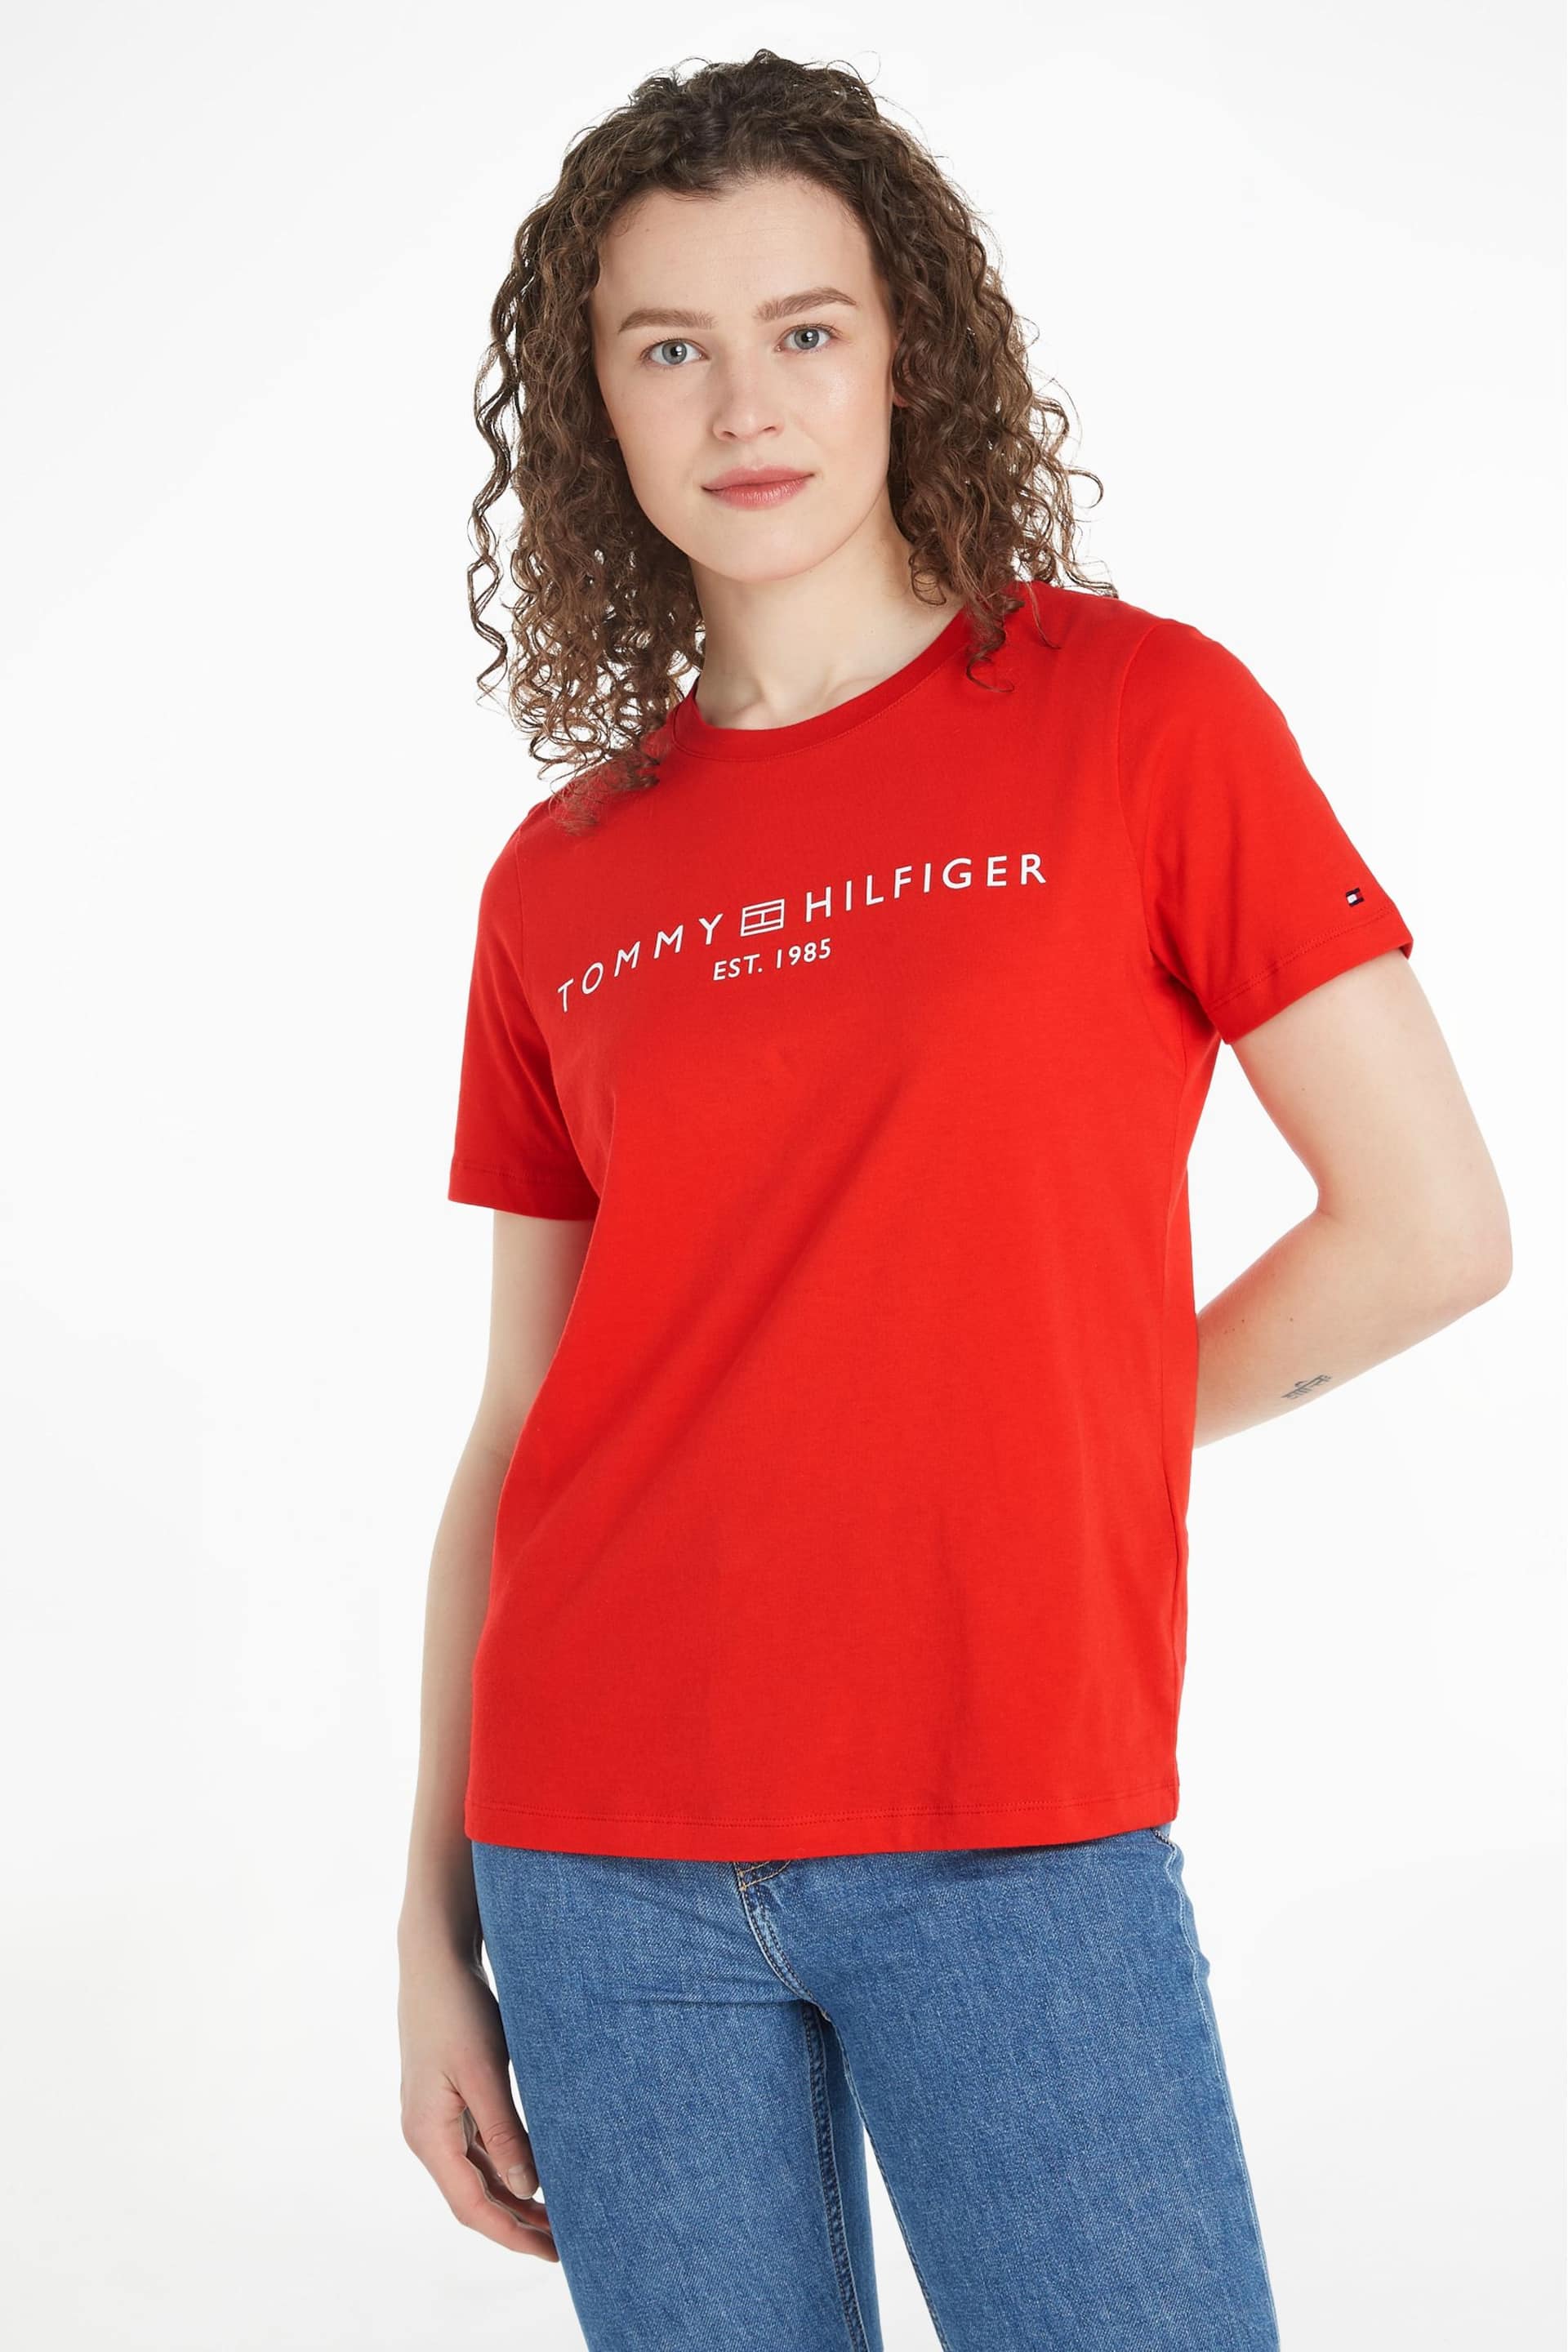 Tommy Hilfiger Red Logo T-Shirt - Image 1 of 6